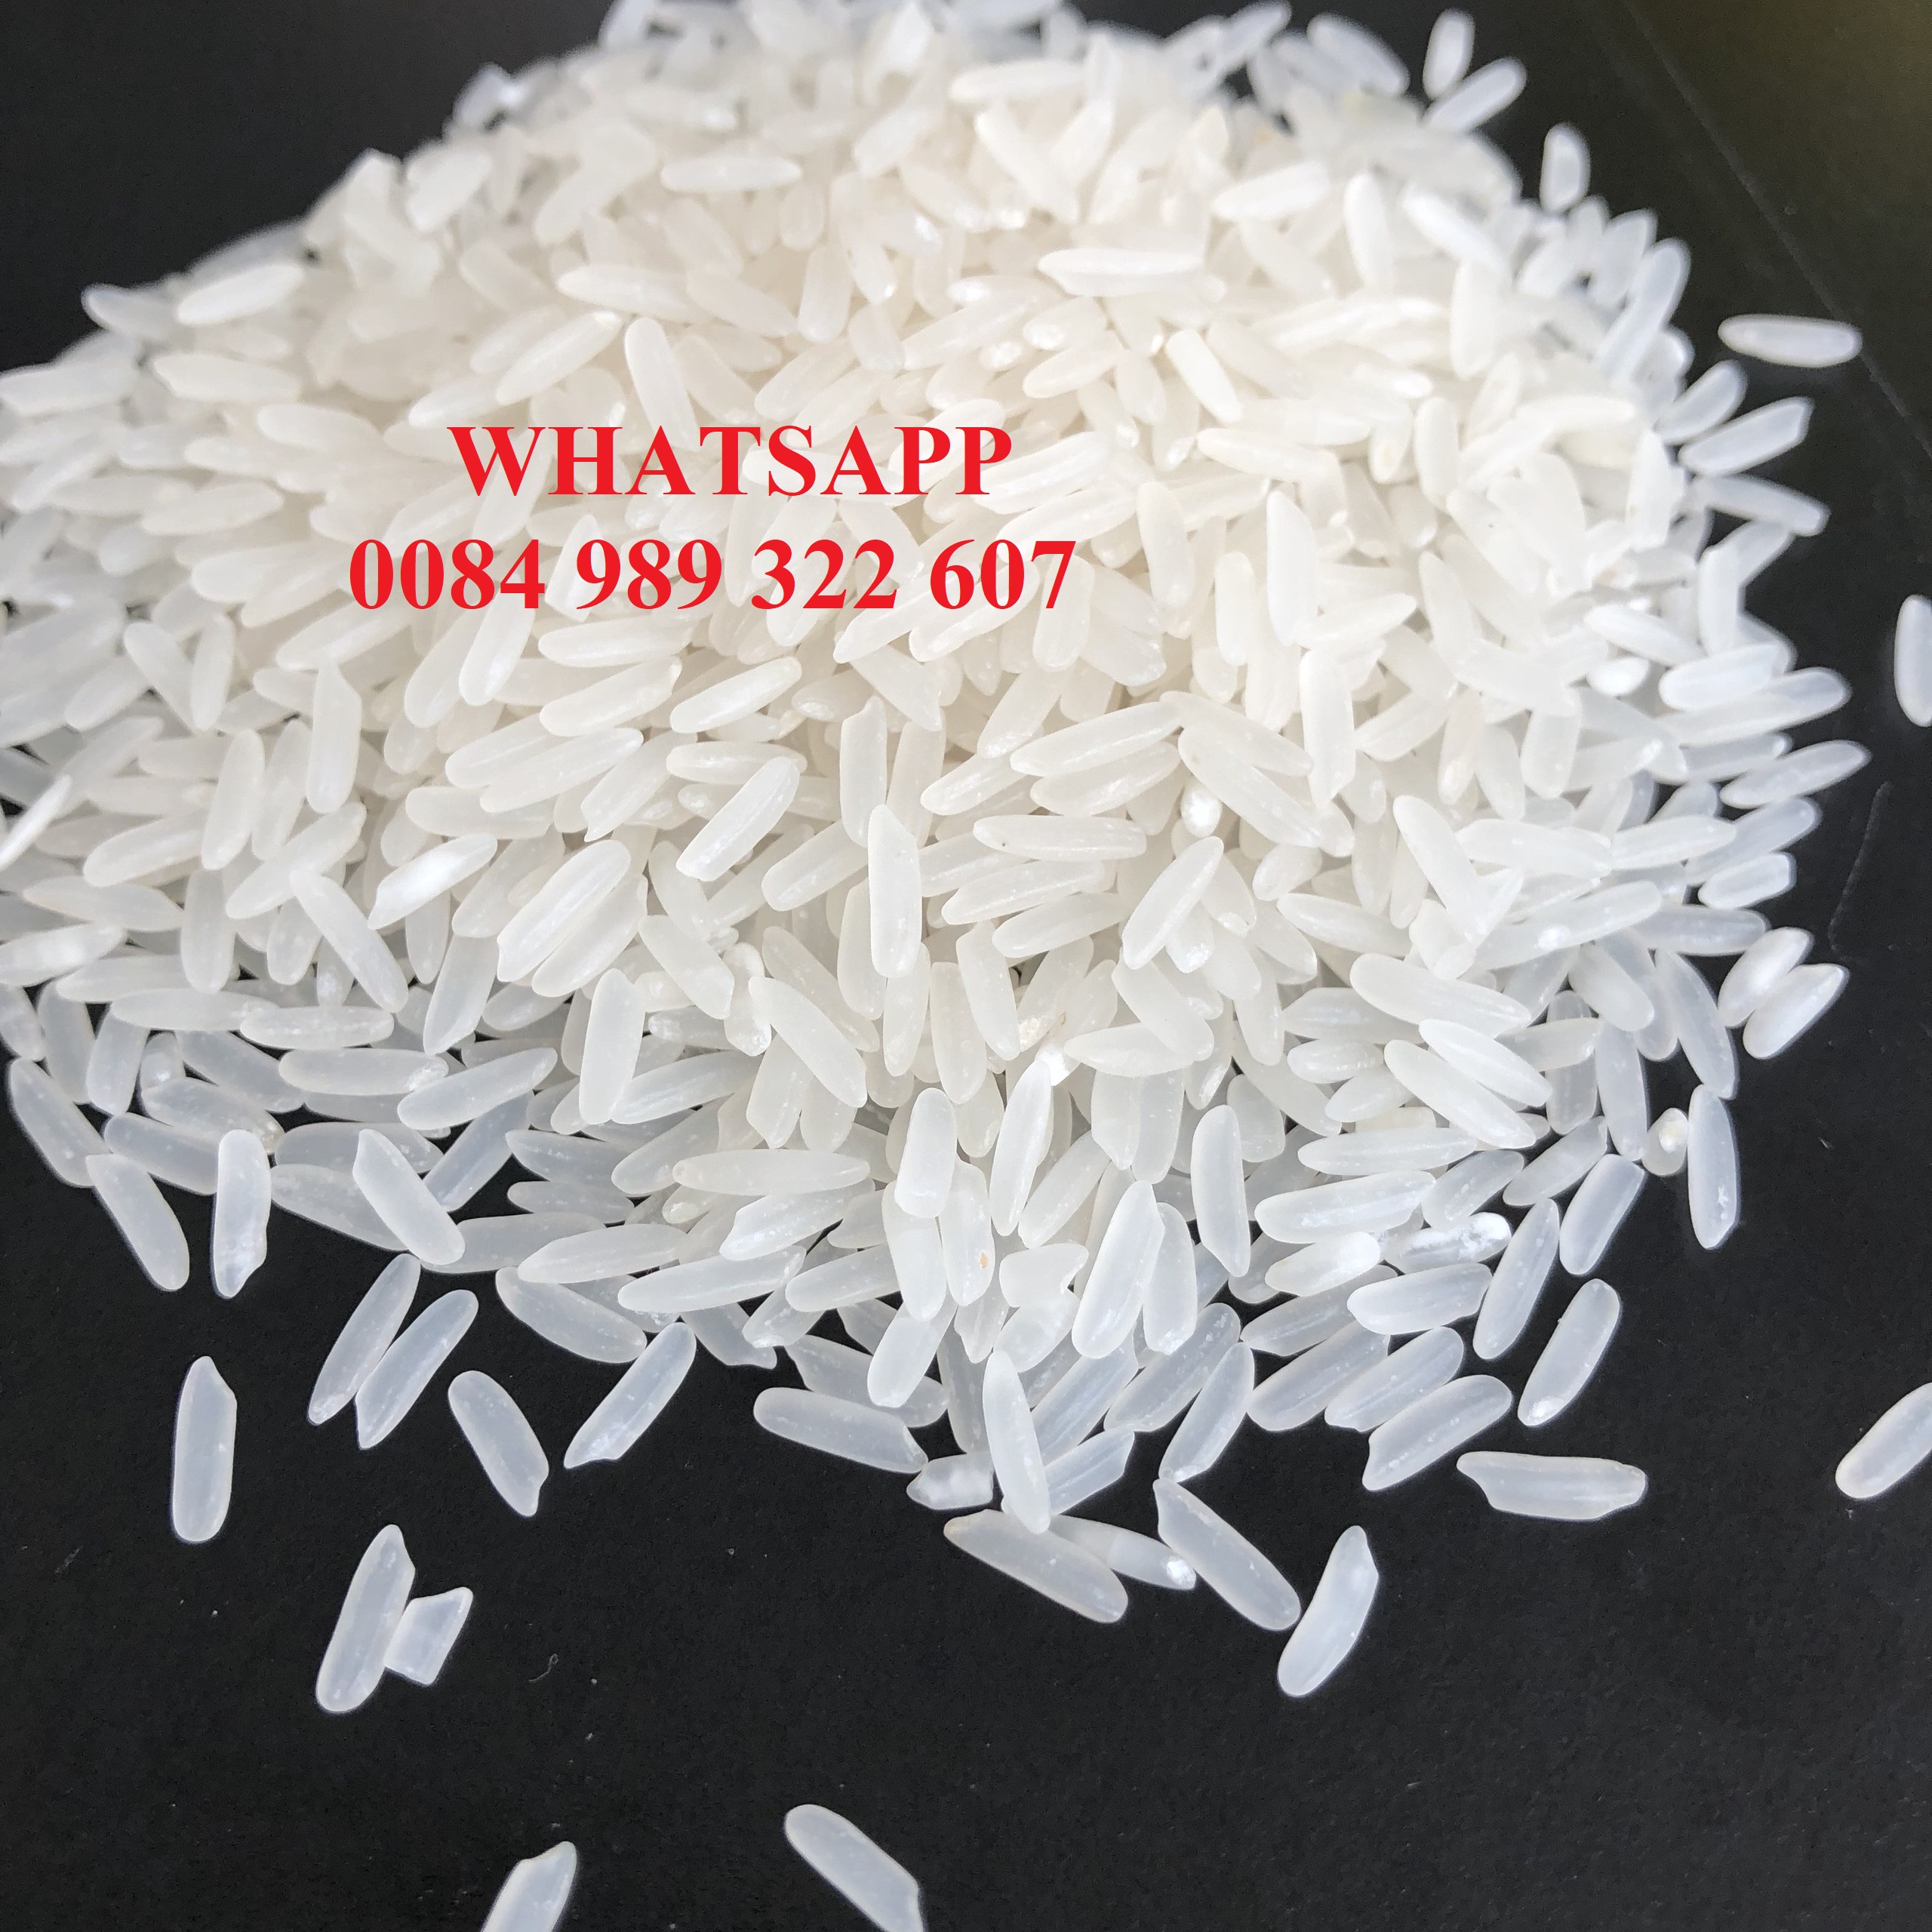 Long grain jasmine rice 5% broken from Vietnam